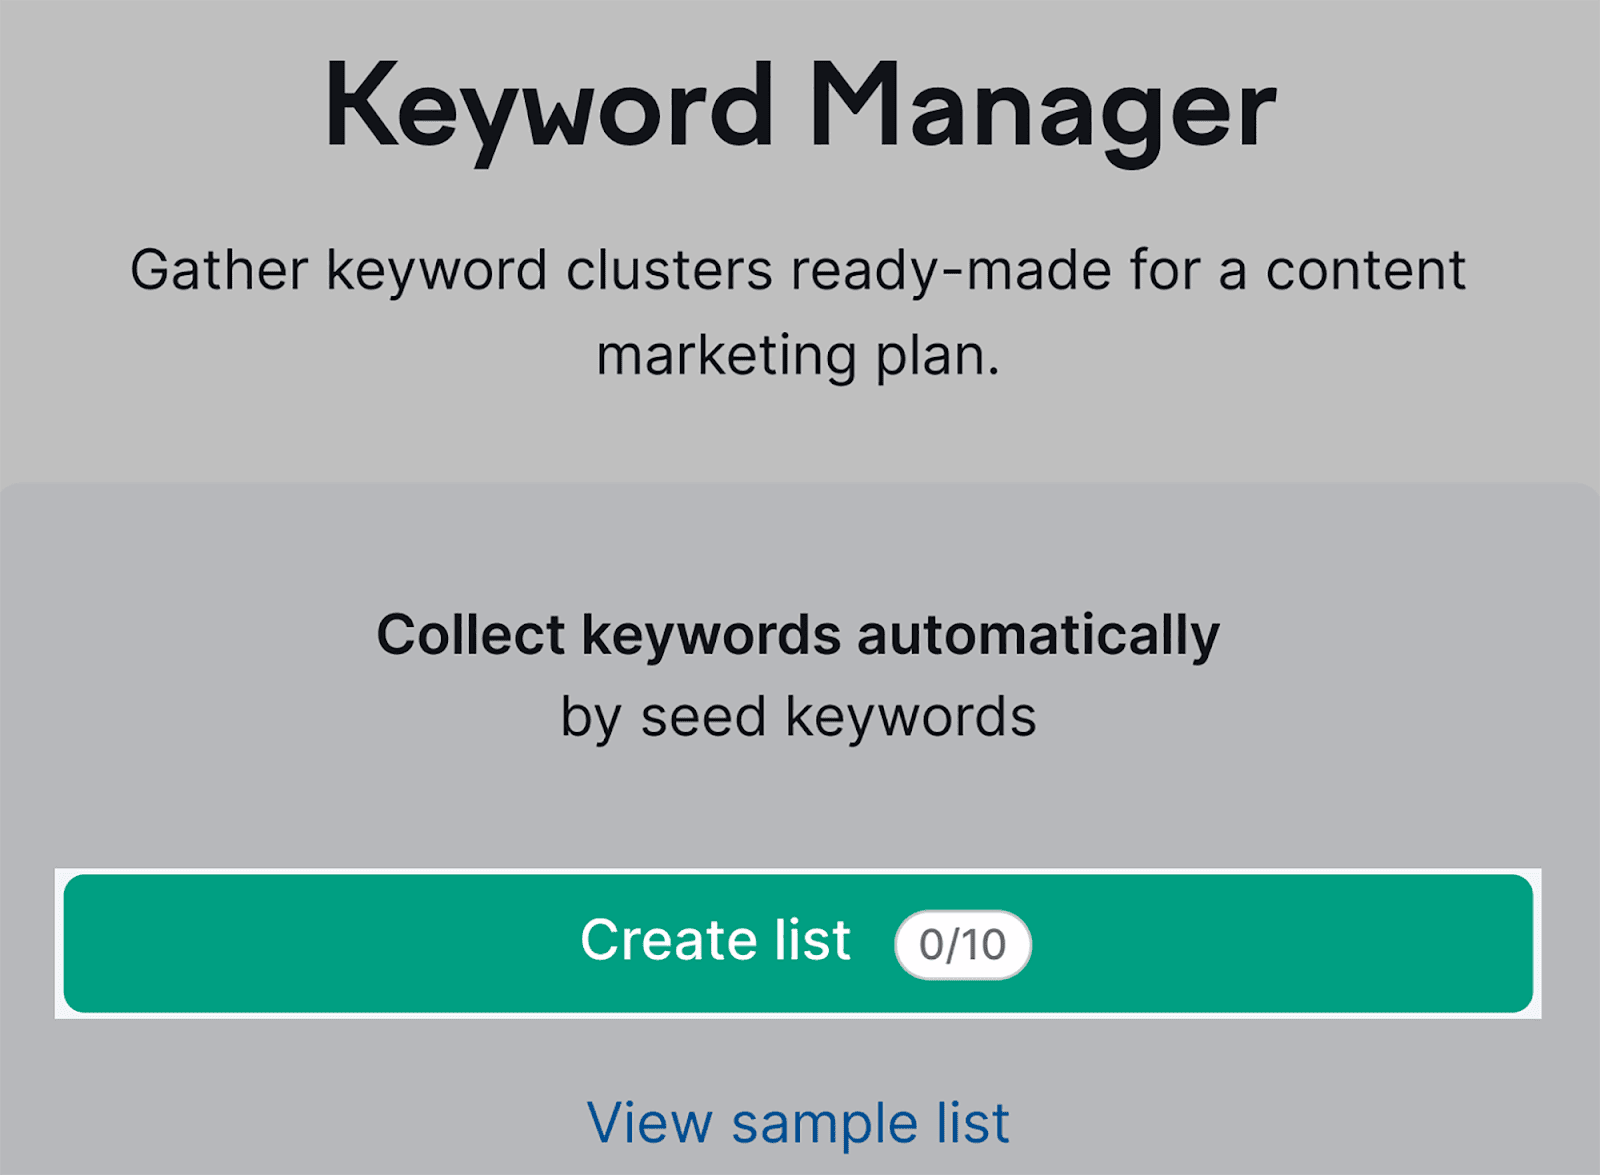 Click create list on Keyword Manager